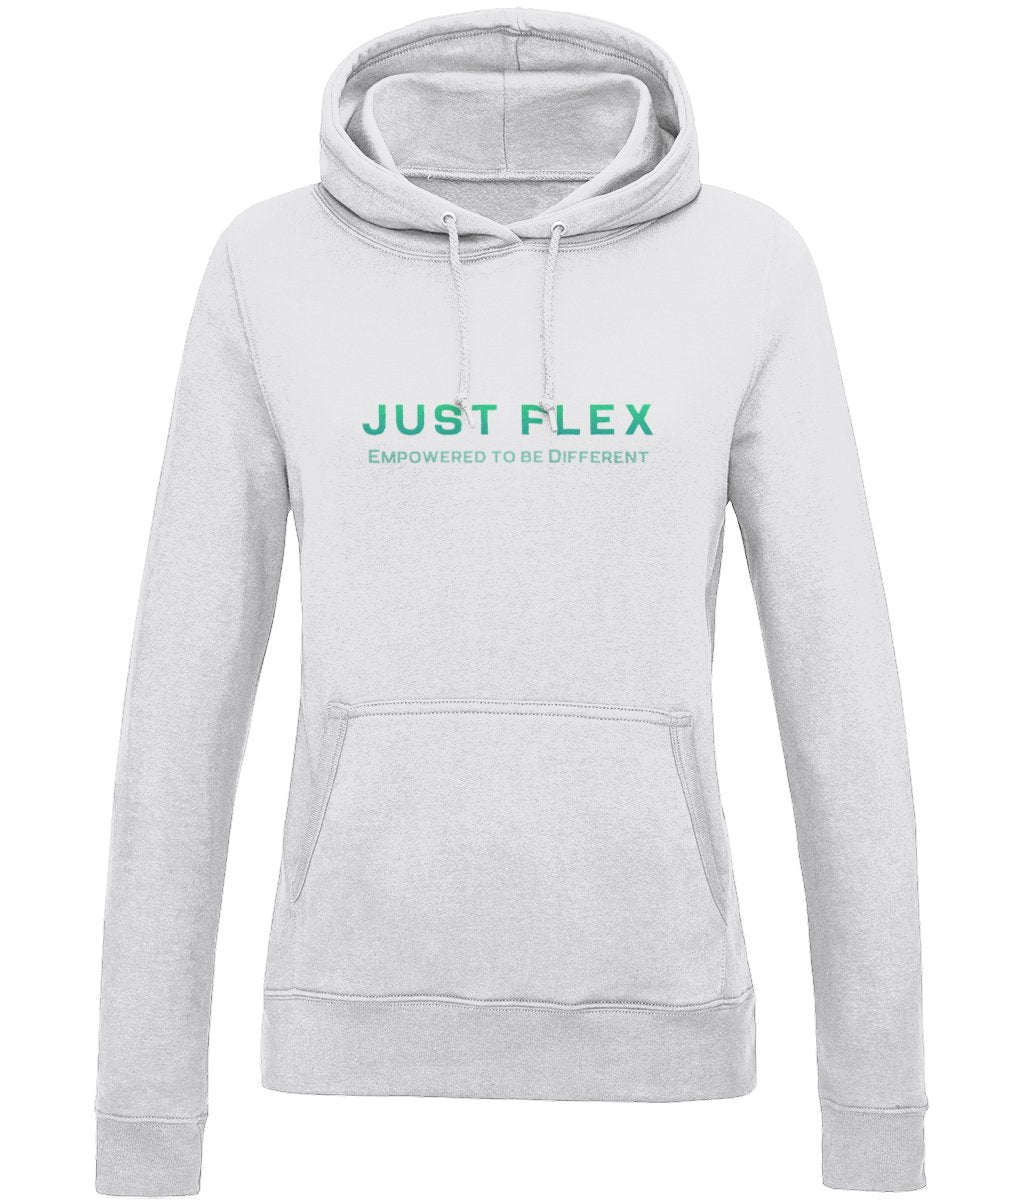 Just Flex - Empowered To Be Different Girlie College Hoodie - Just Flex